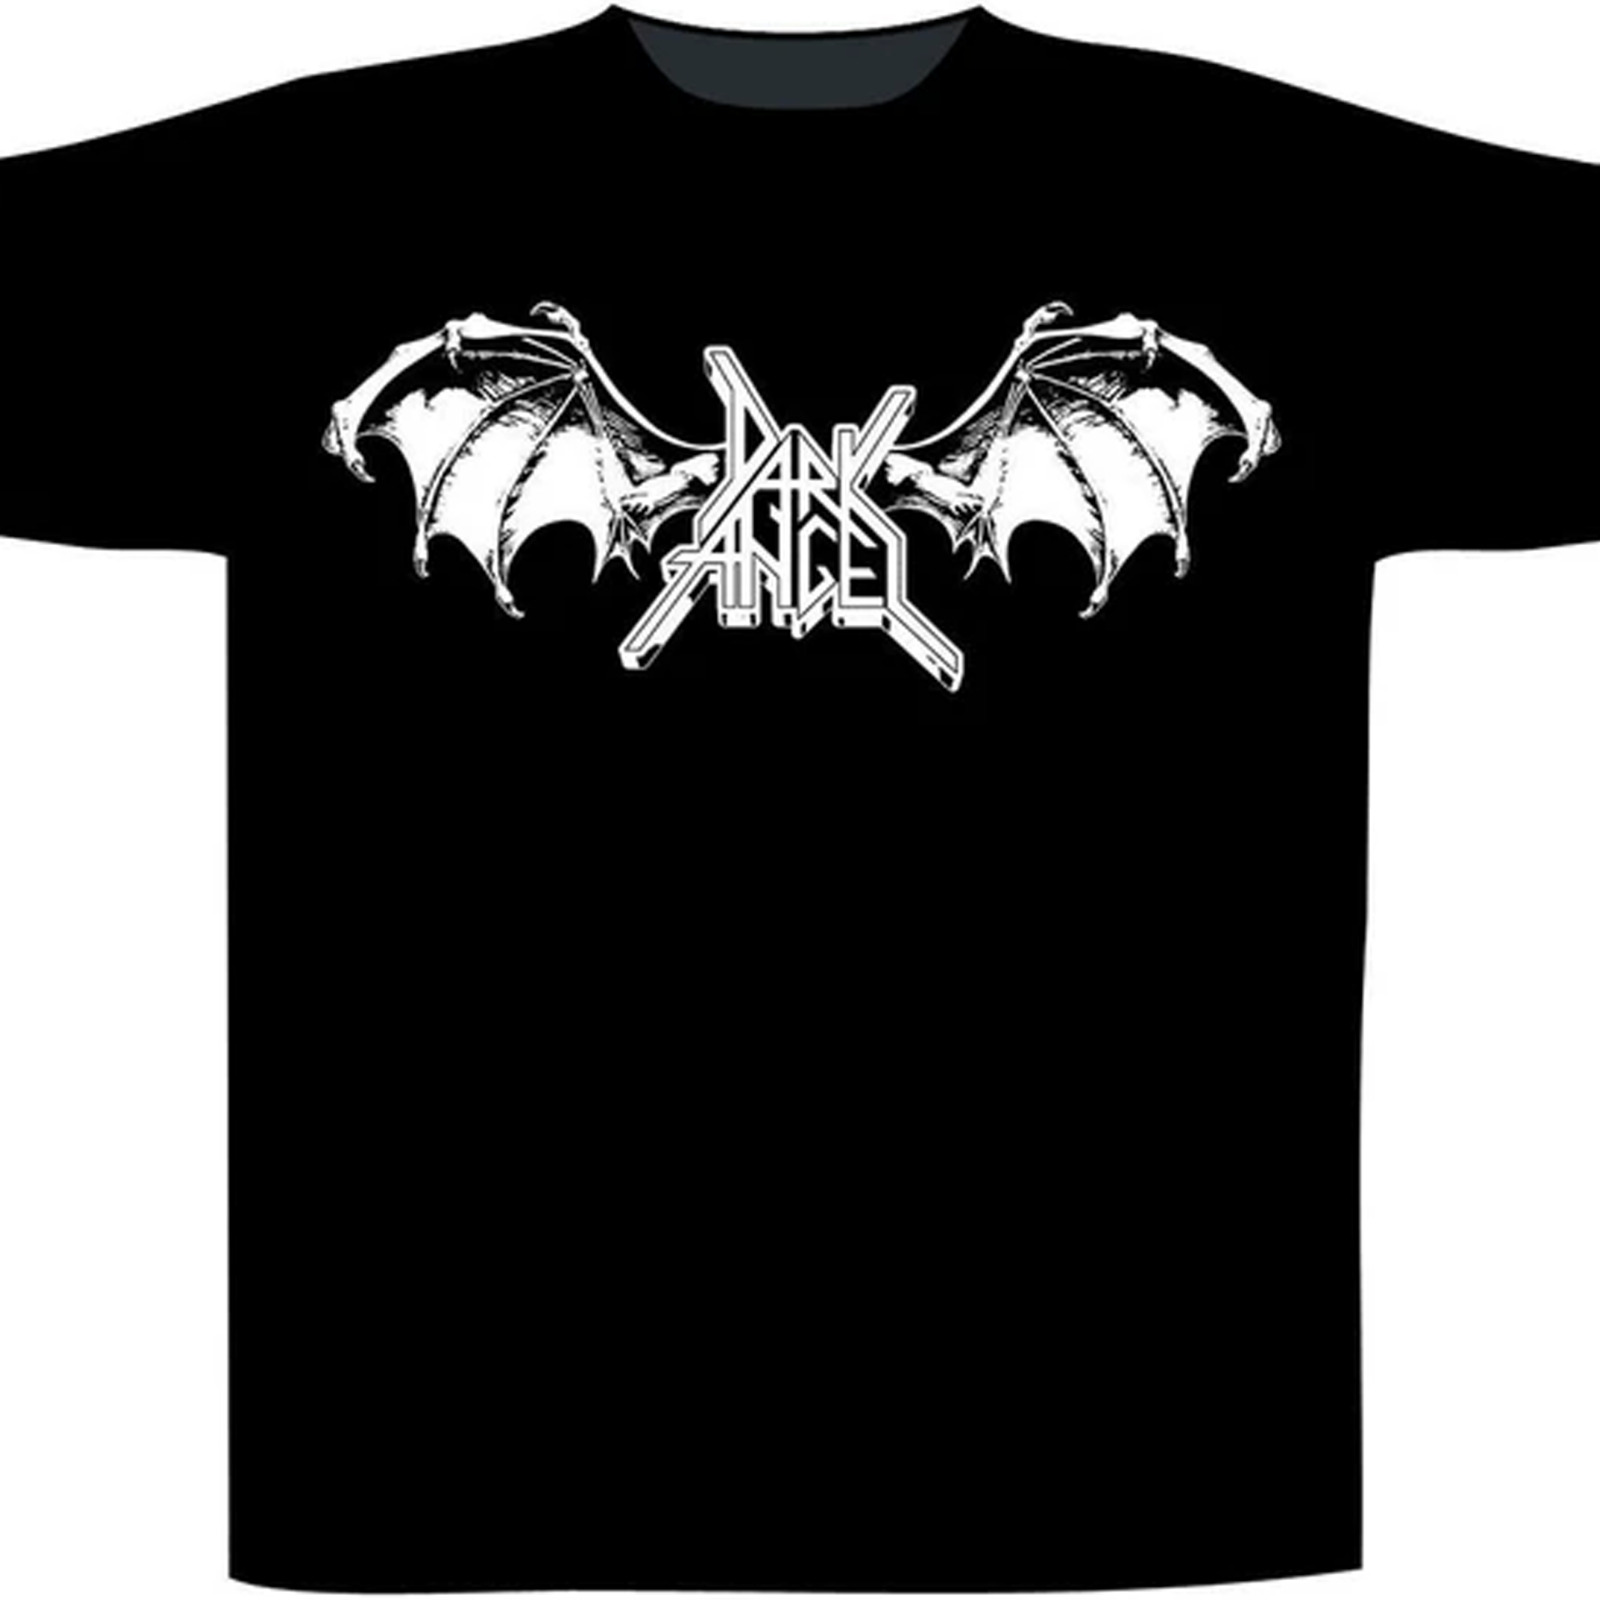 VTG Dark Angel BAND T-shirt black Unisex all sizes S-5Xl TA3692